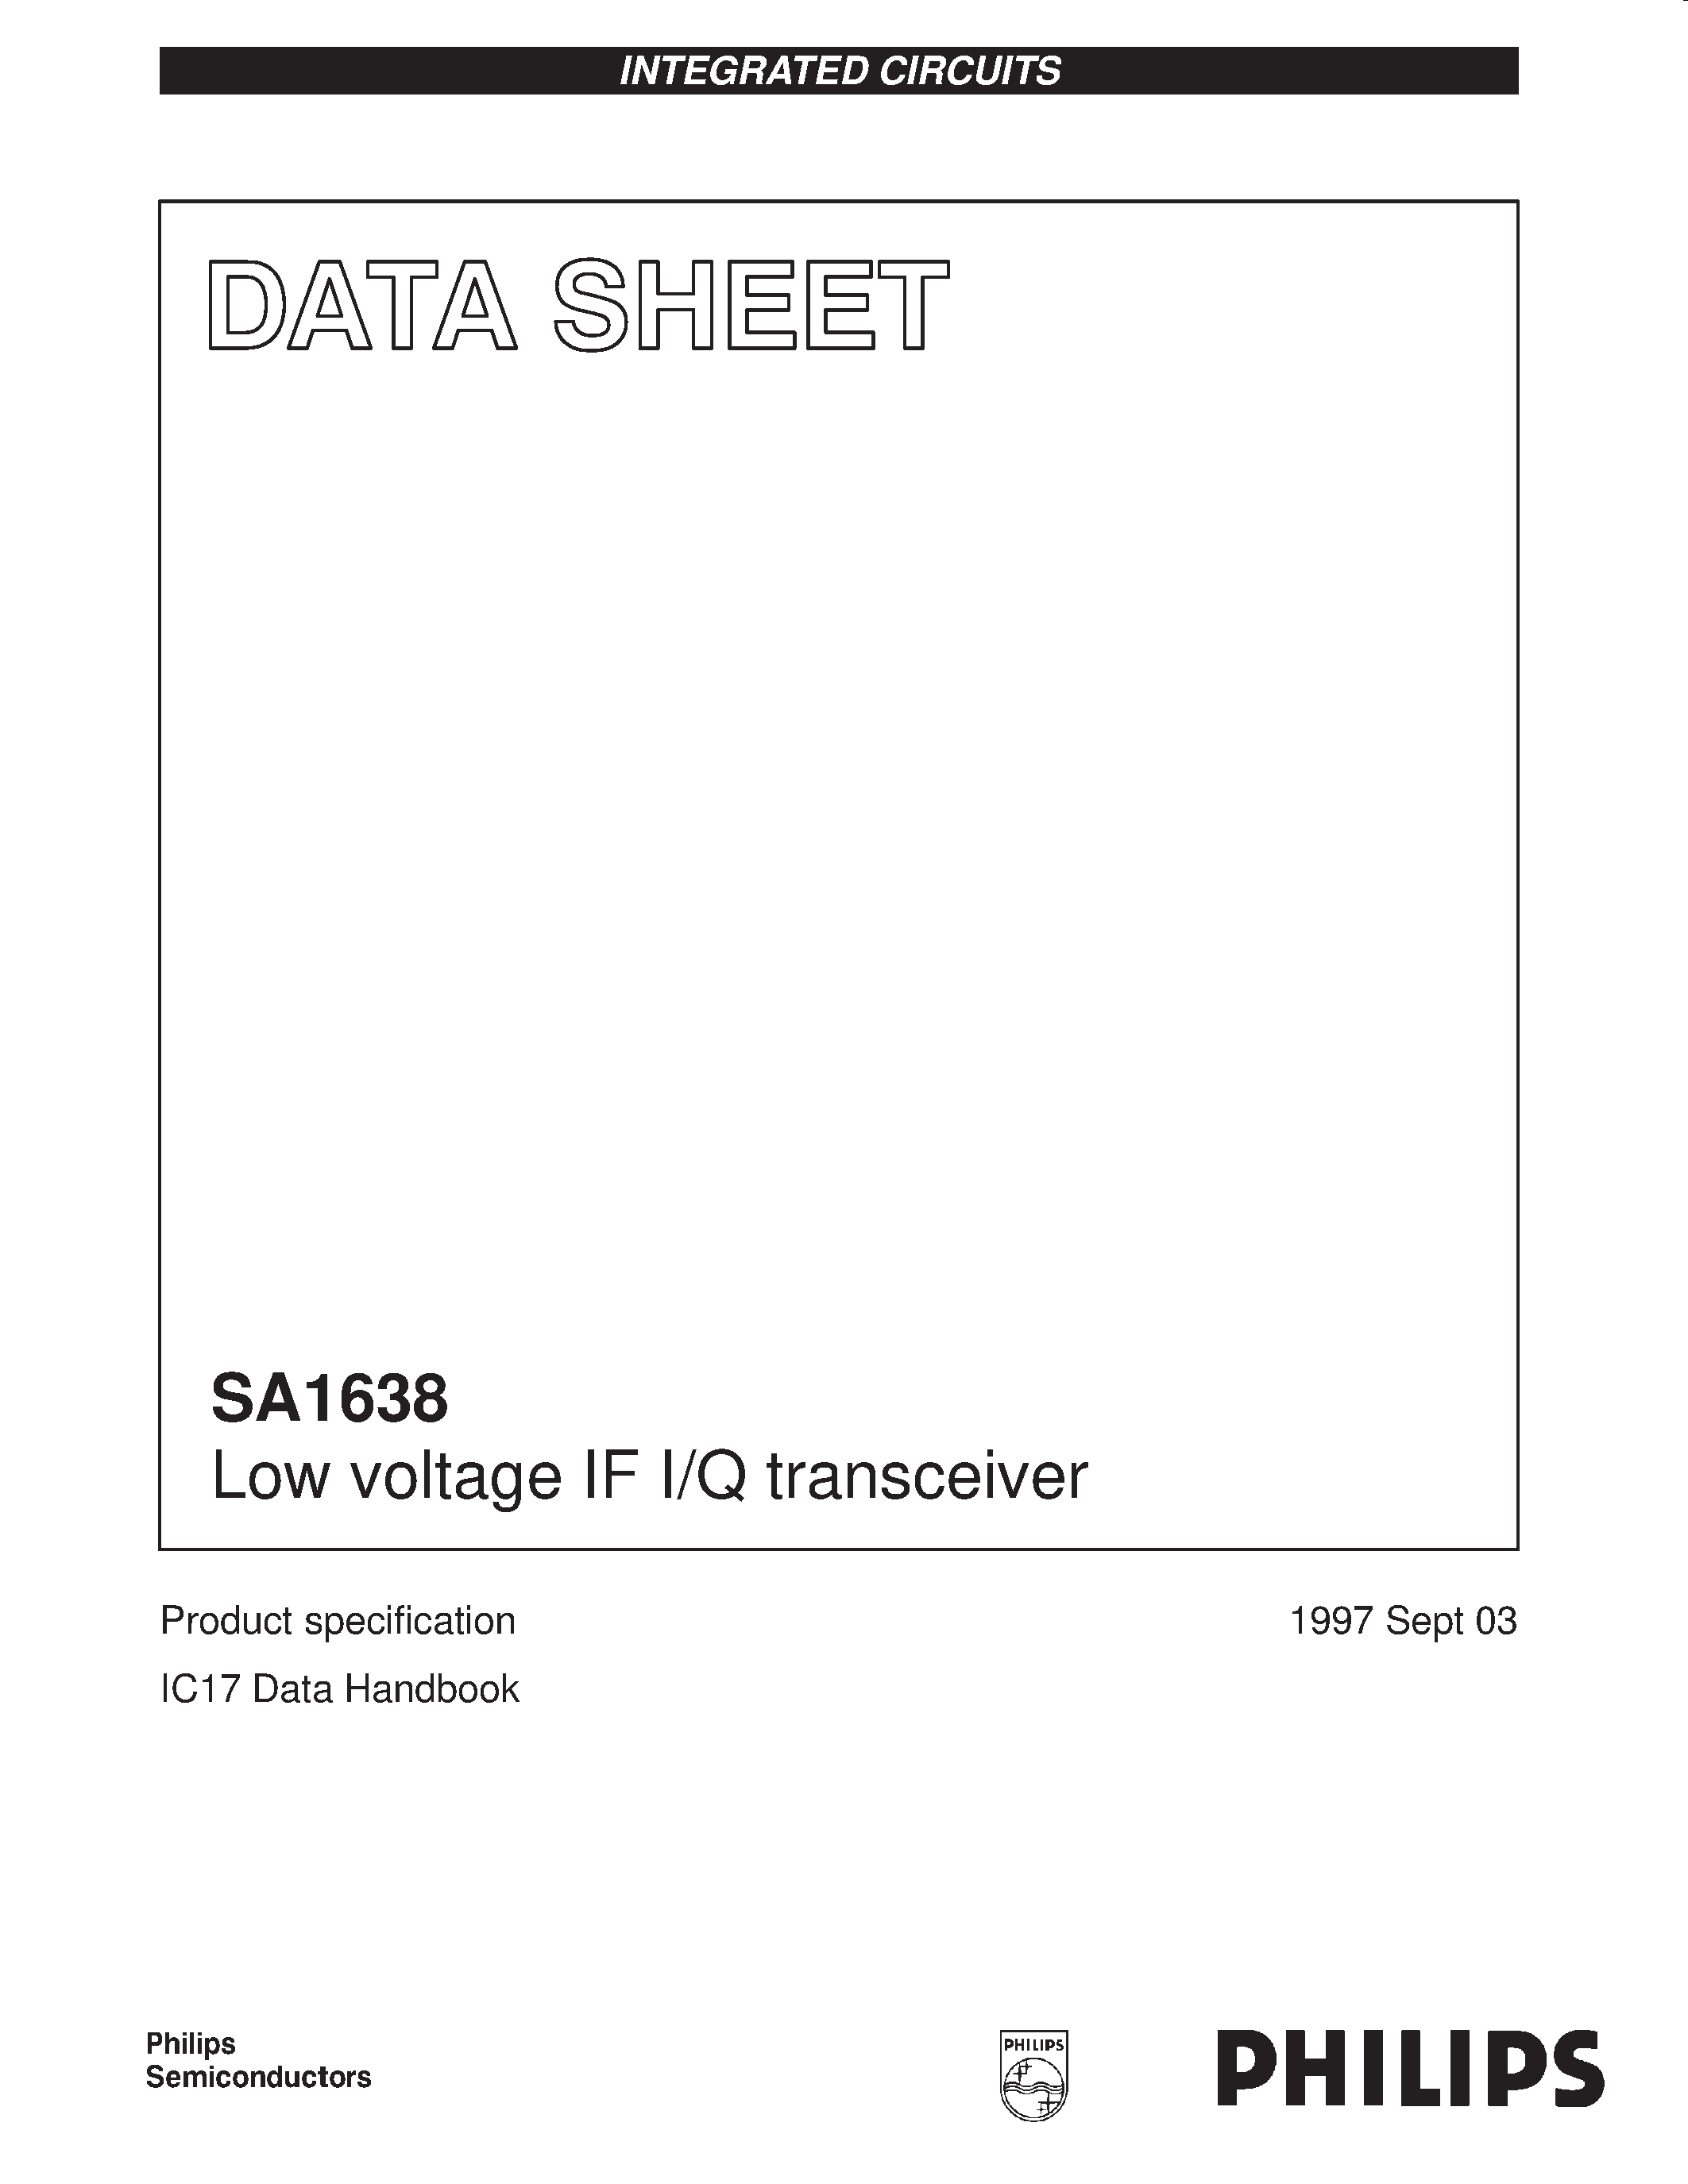 Даташит SA1638 - Low voltage IF I/Q transceiver страница 1